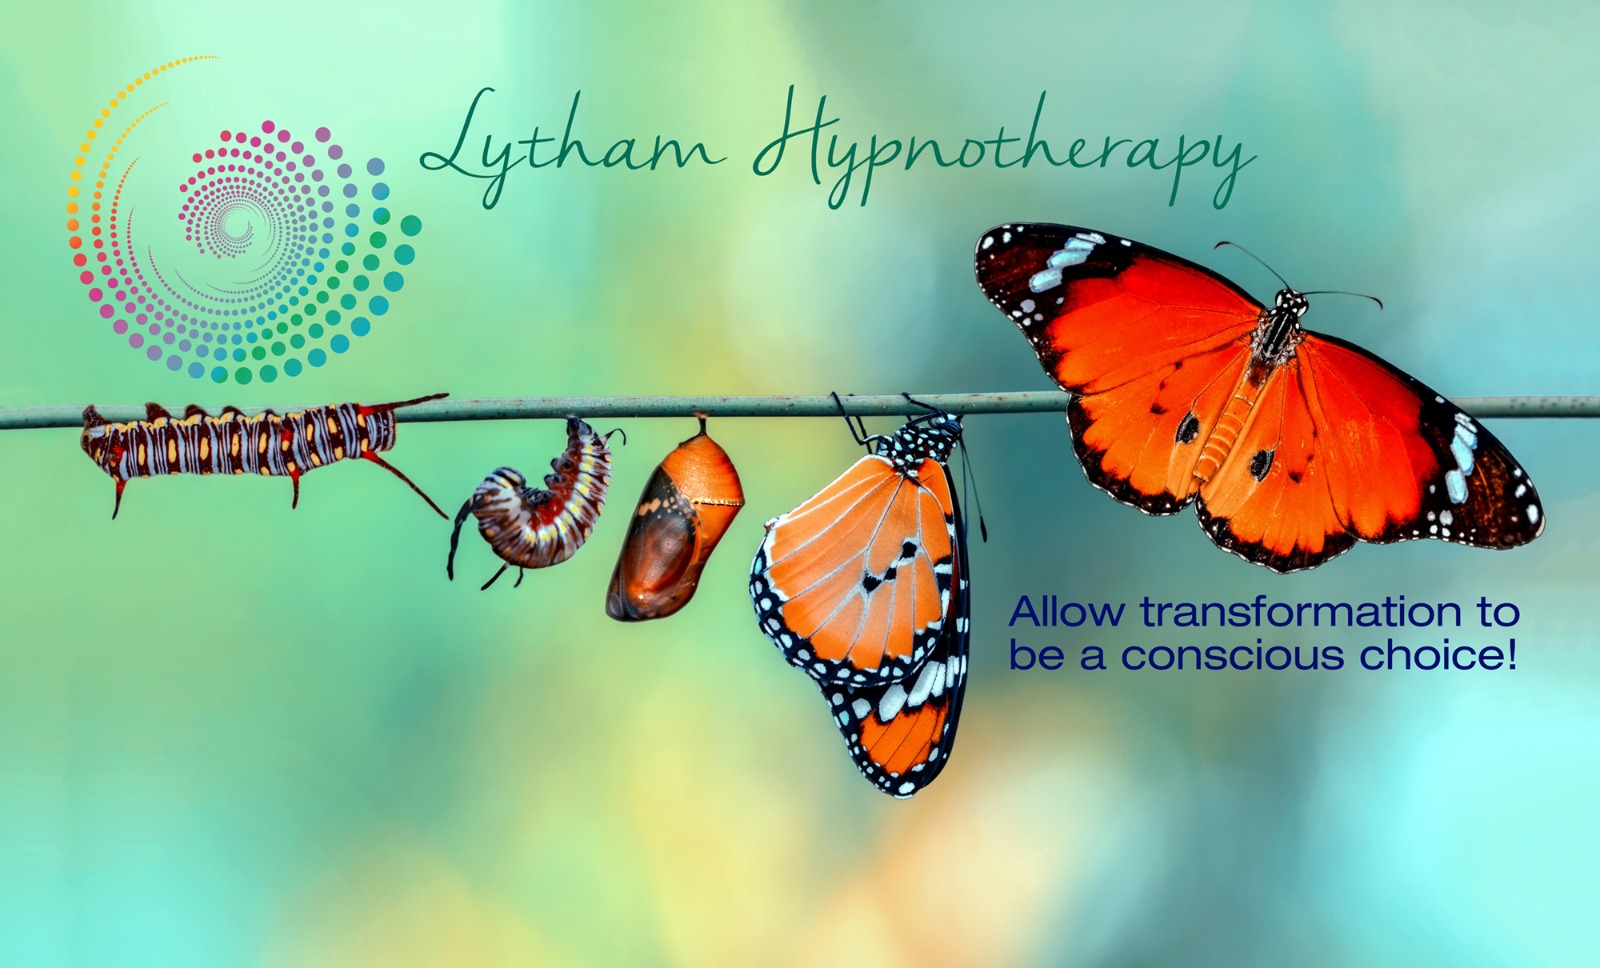 Lytham Hypnotherapy